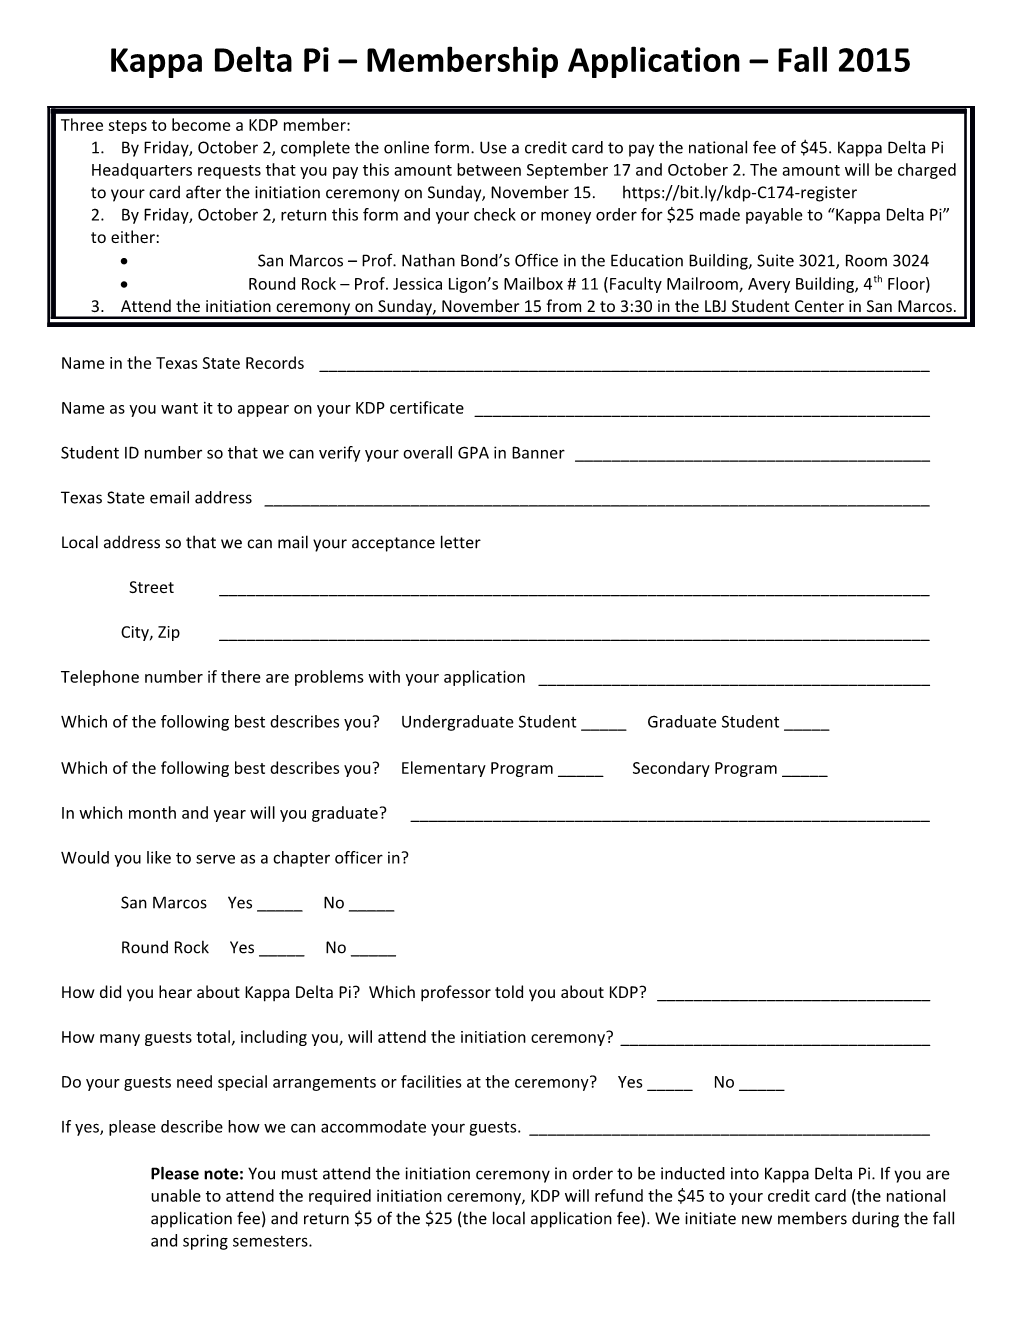 Kappa Delta Pi Membership Application Fall 2015